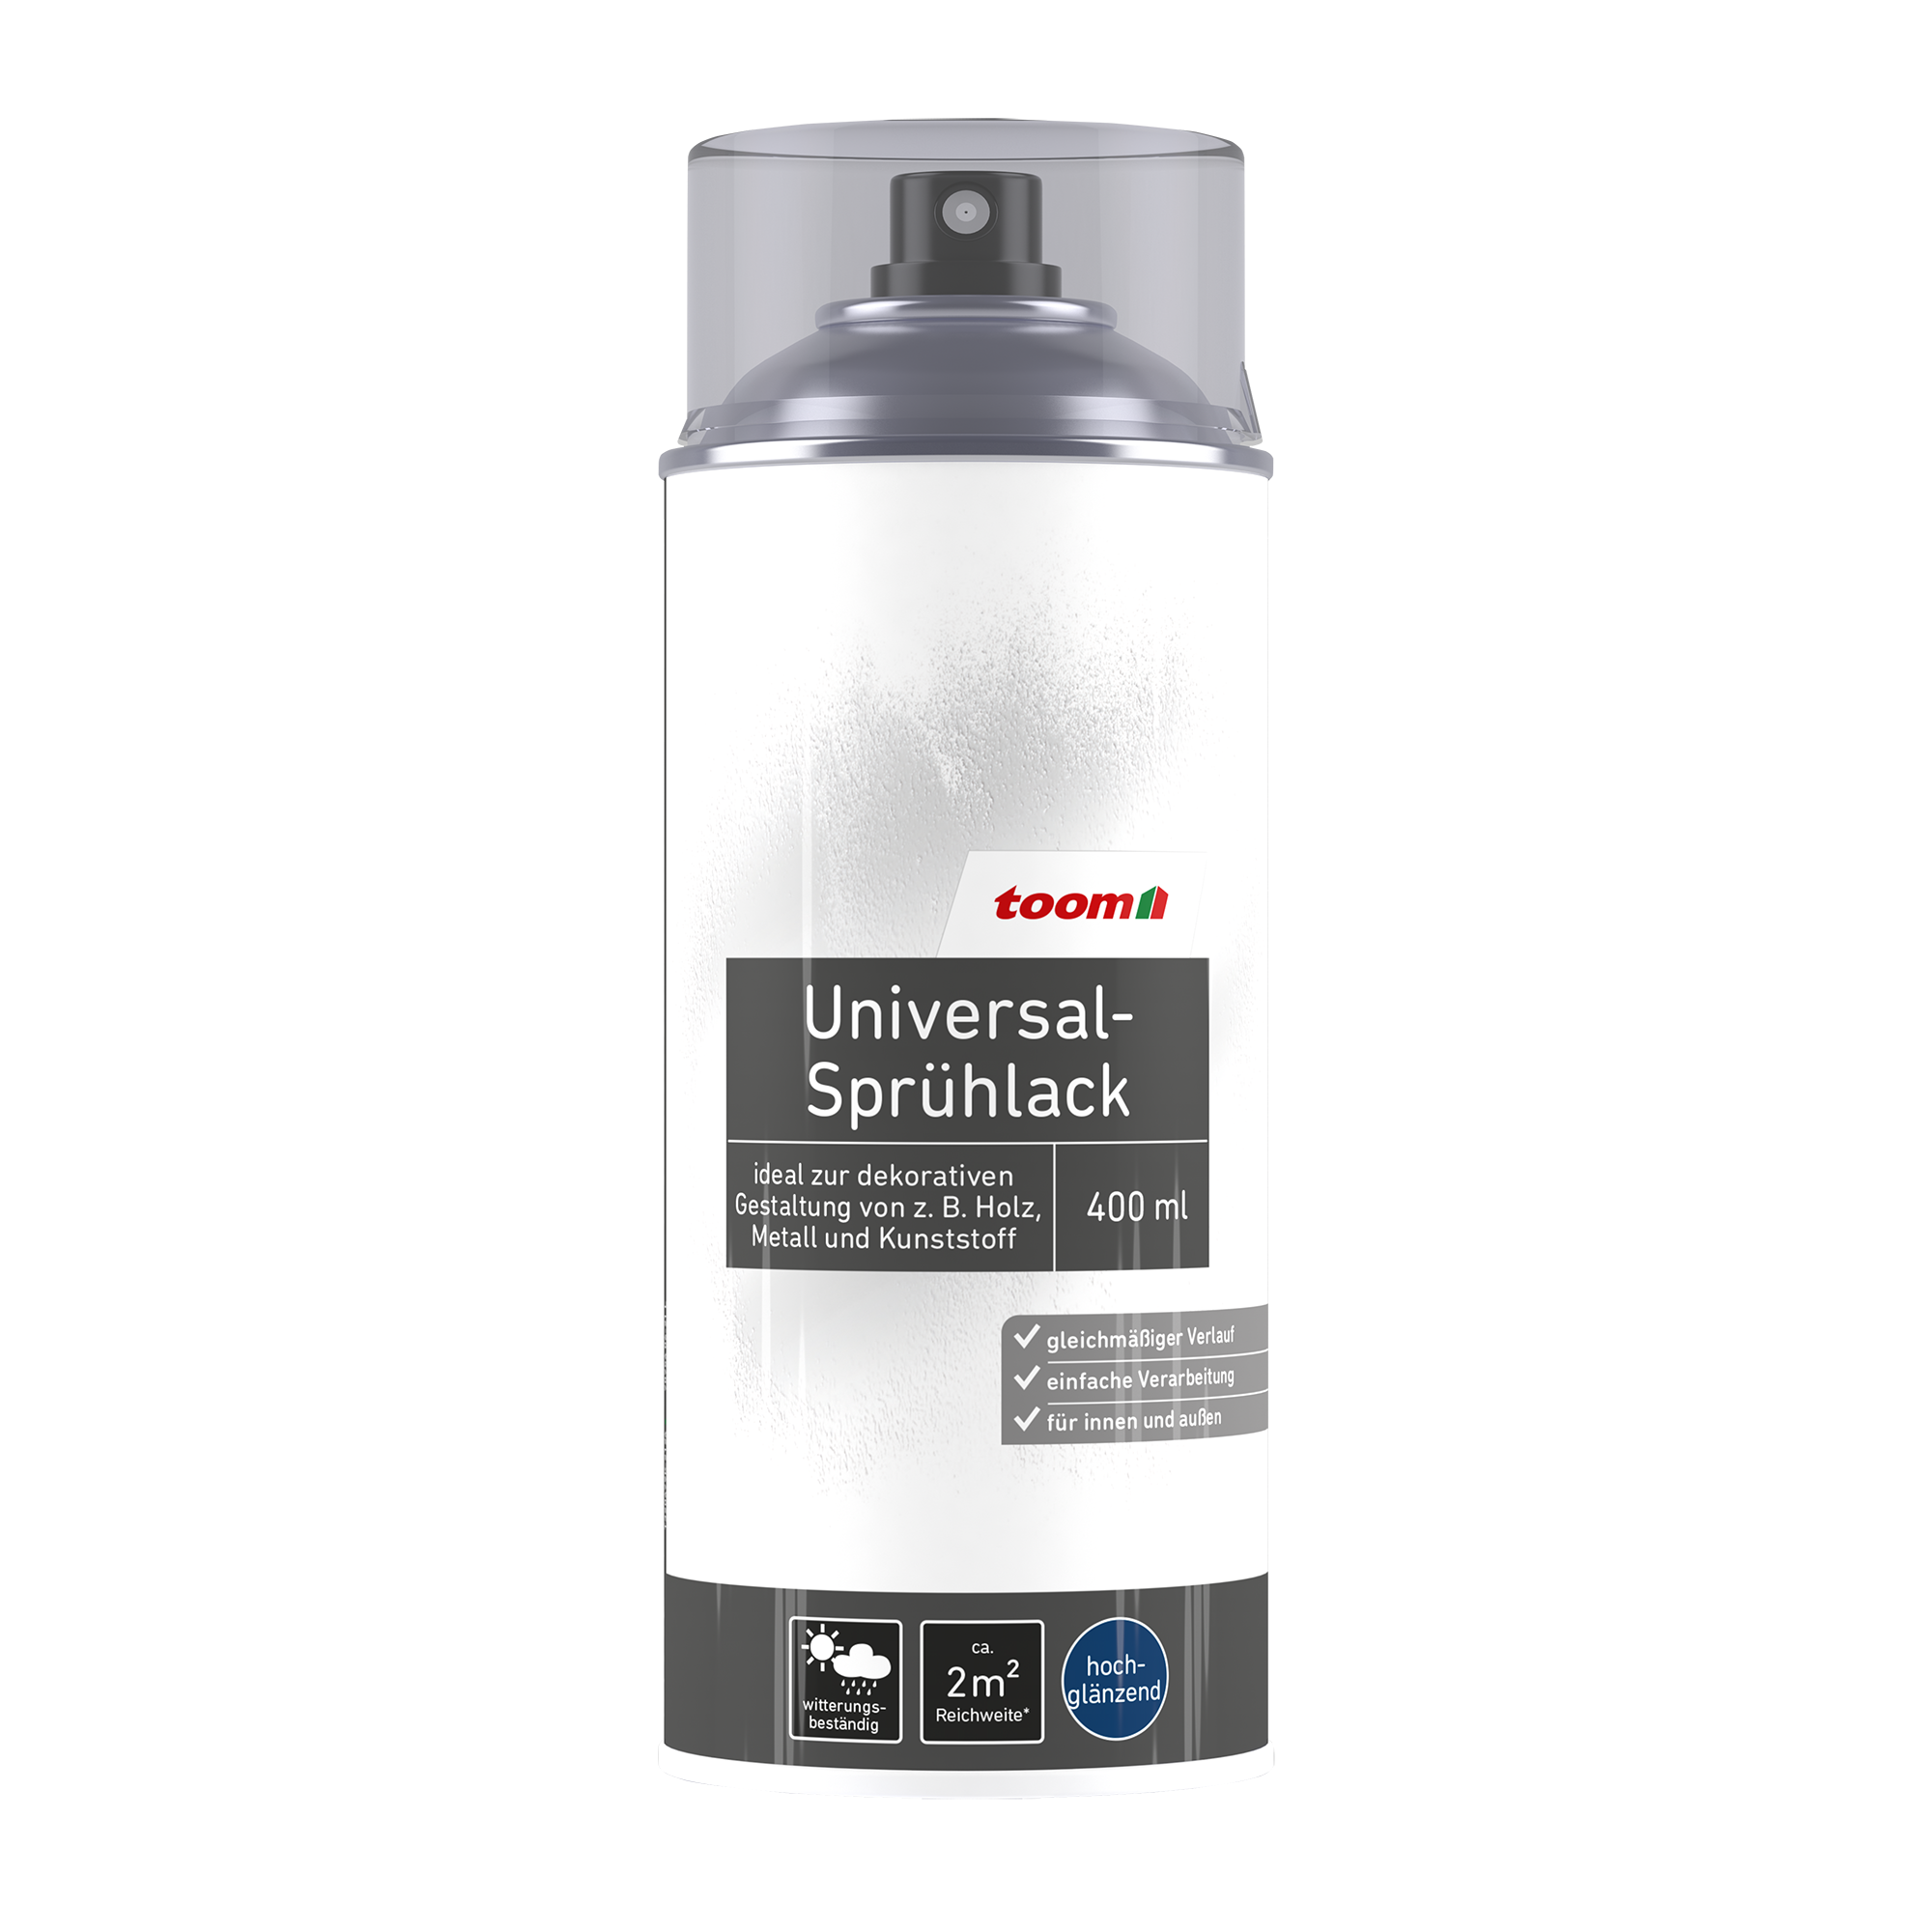 Universal-Sprühlack transparent glänzend 400 ml + product picture